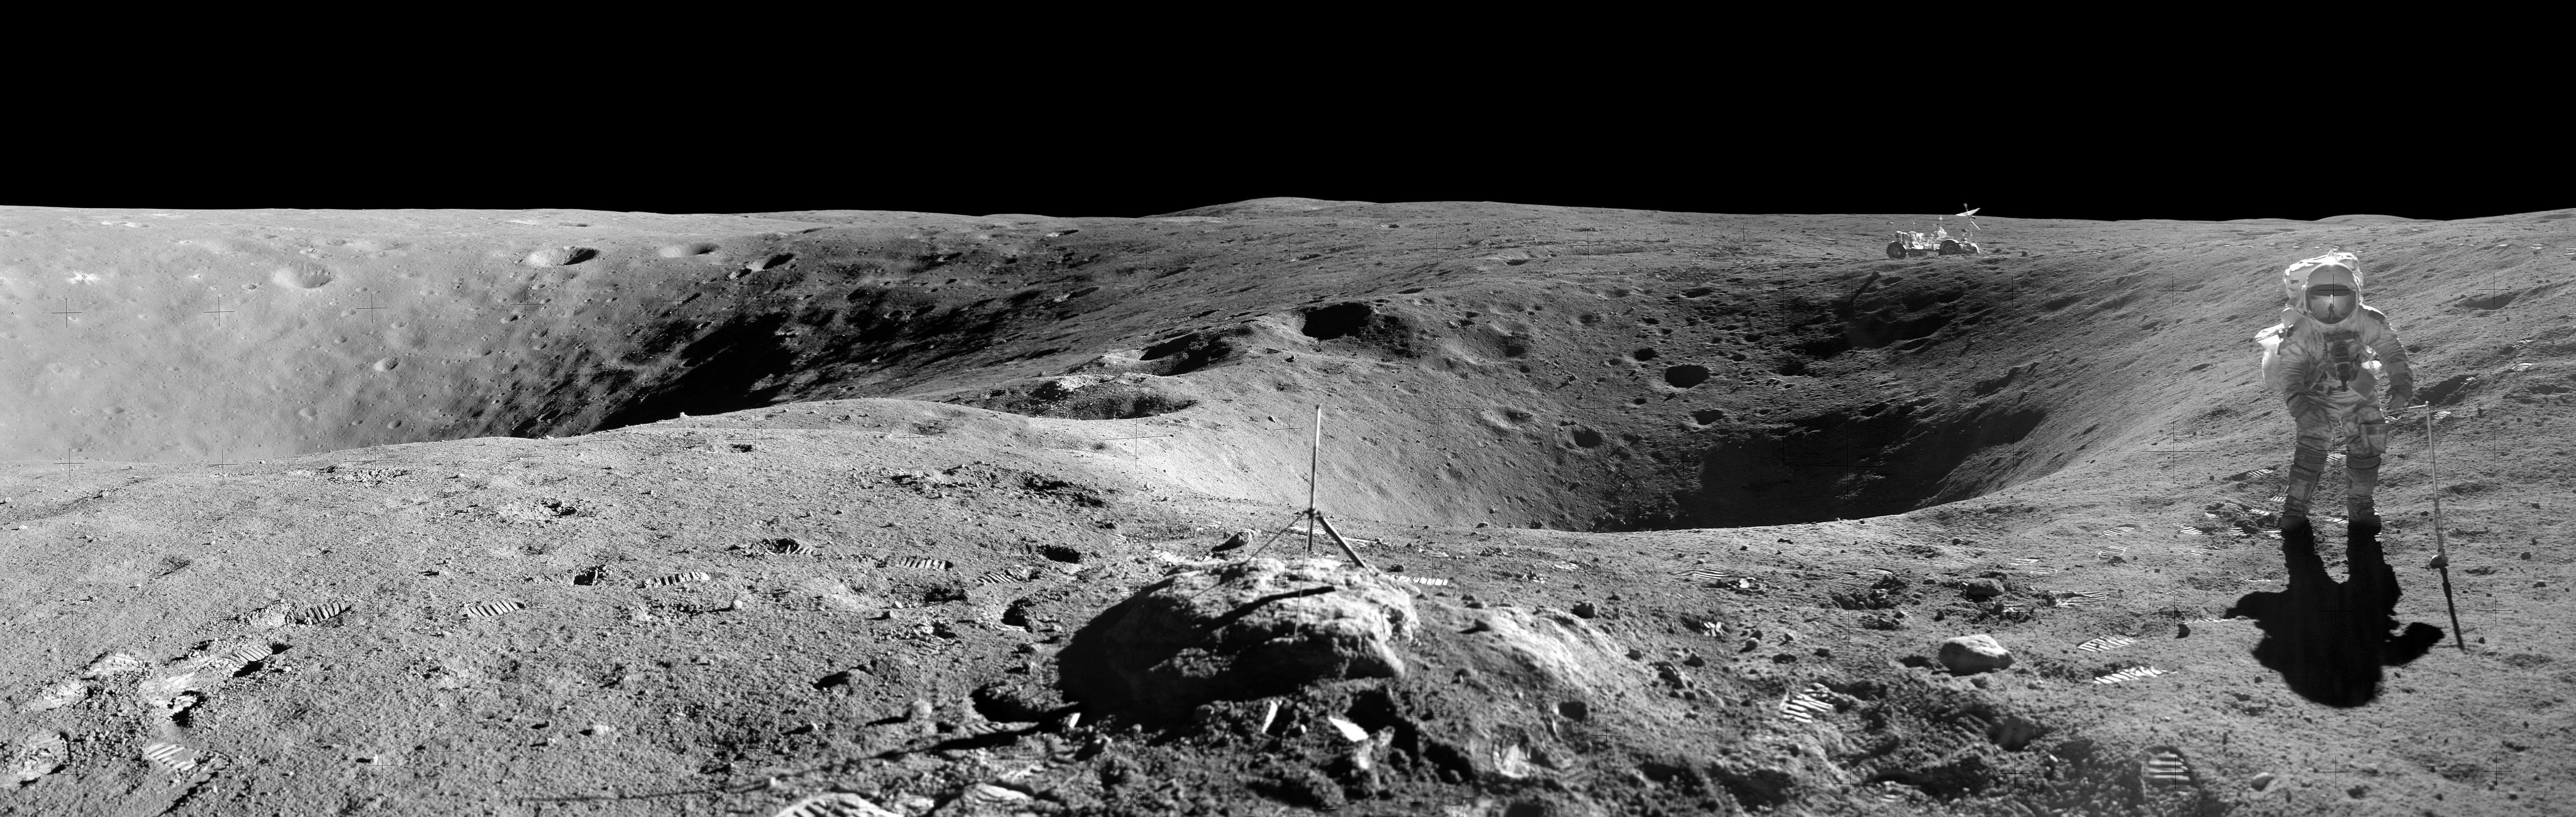 7740x2454] Apollo 16 Moon Landing [x Post R Space]